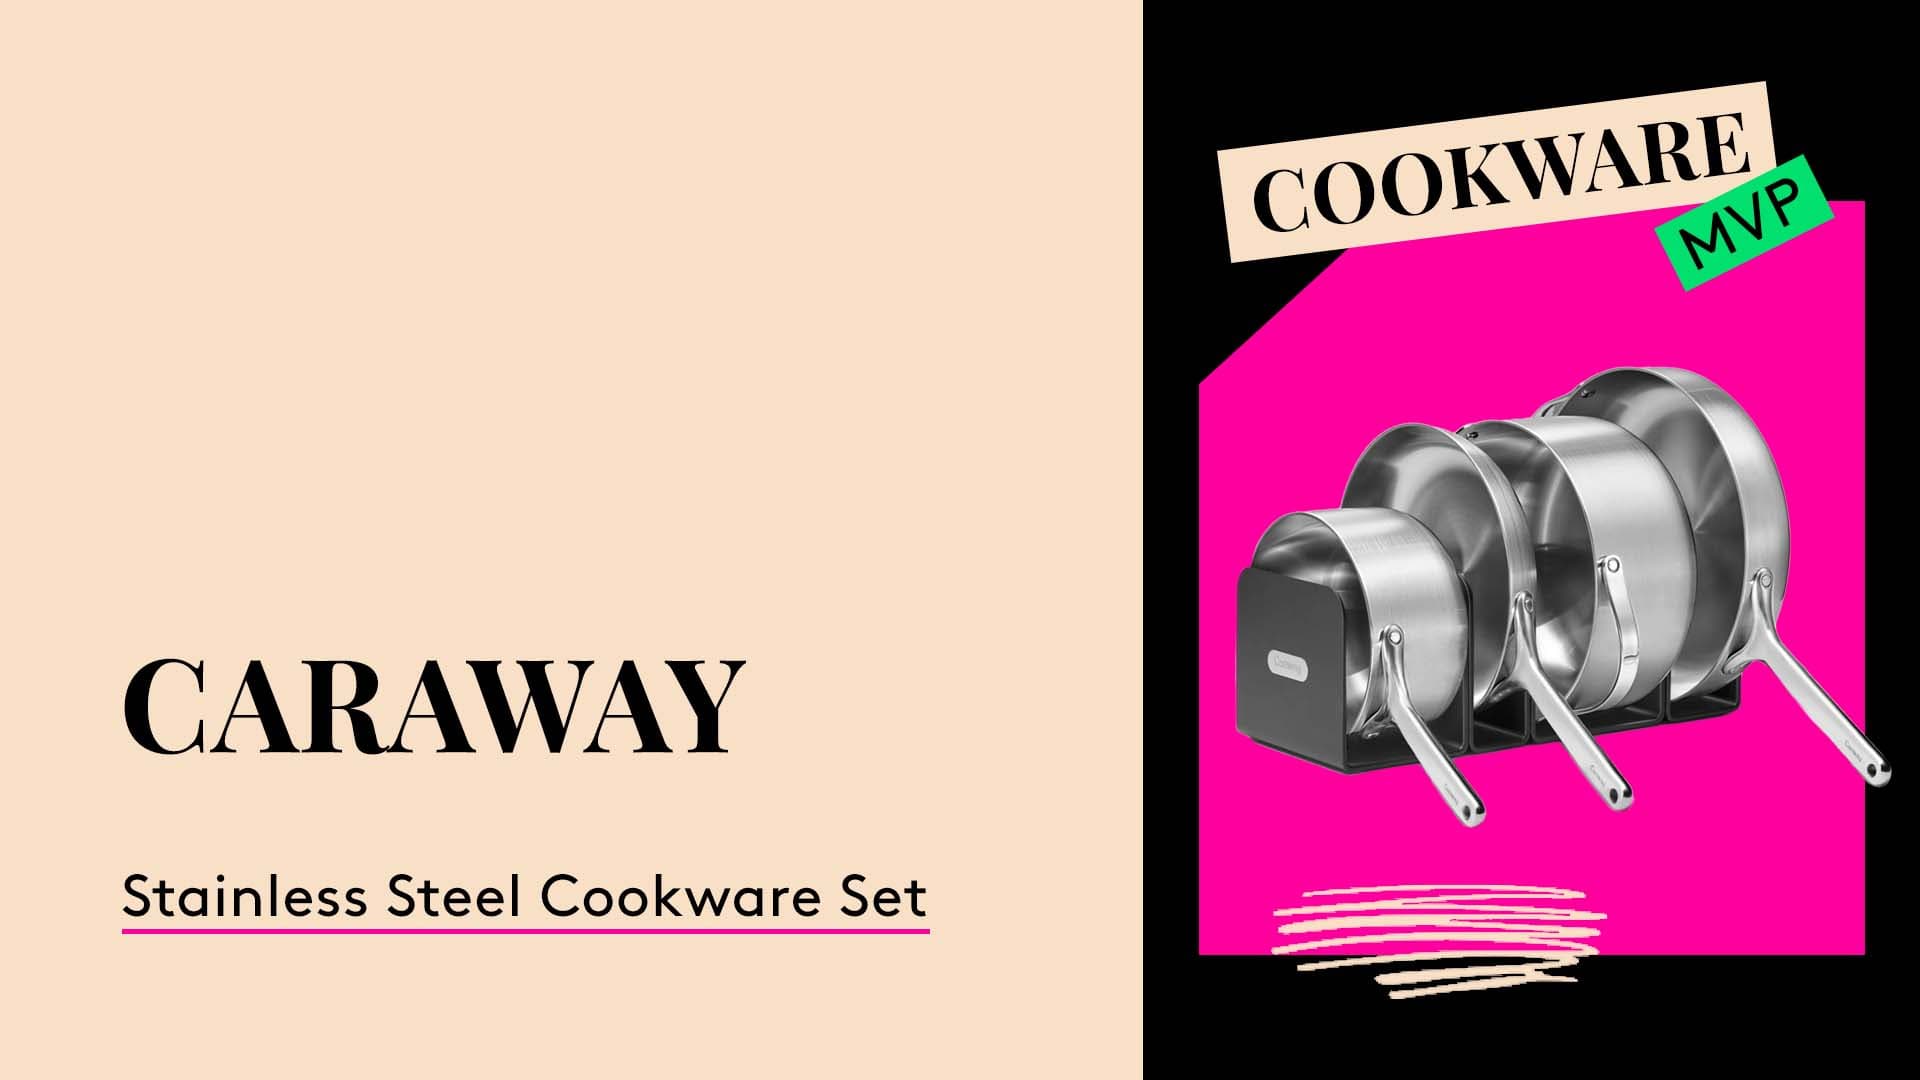 Cookware MVP. Caraway Stainless Steel Cookware Set.